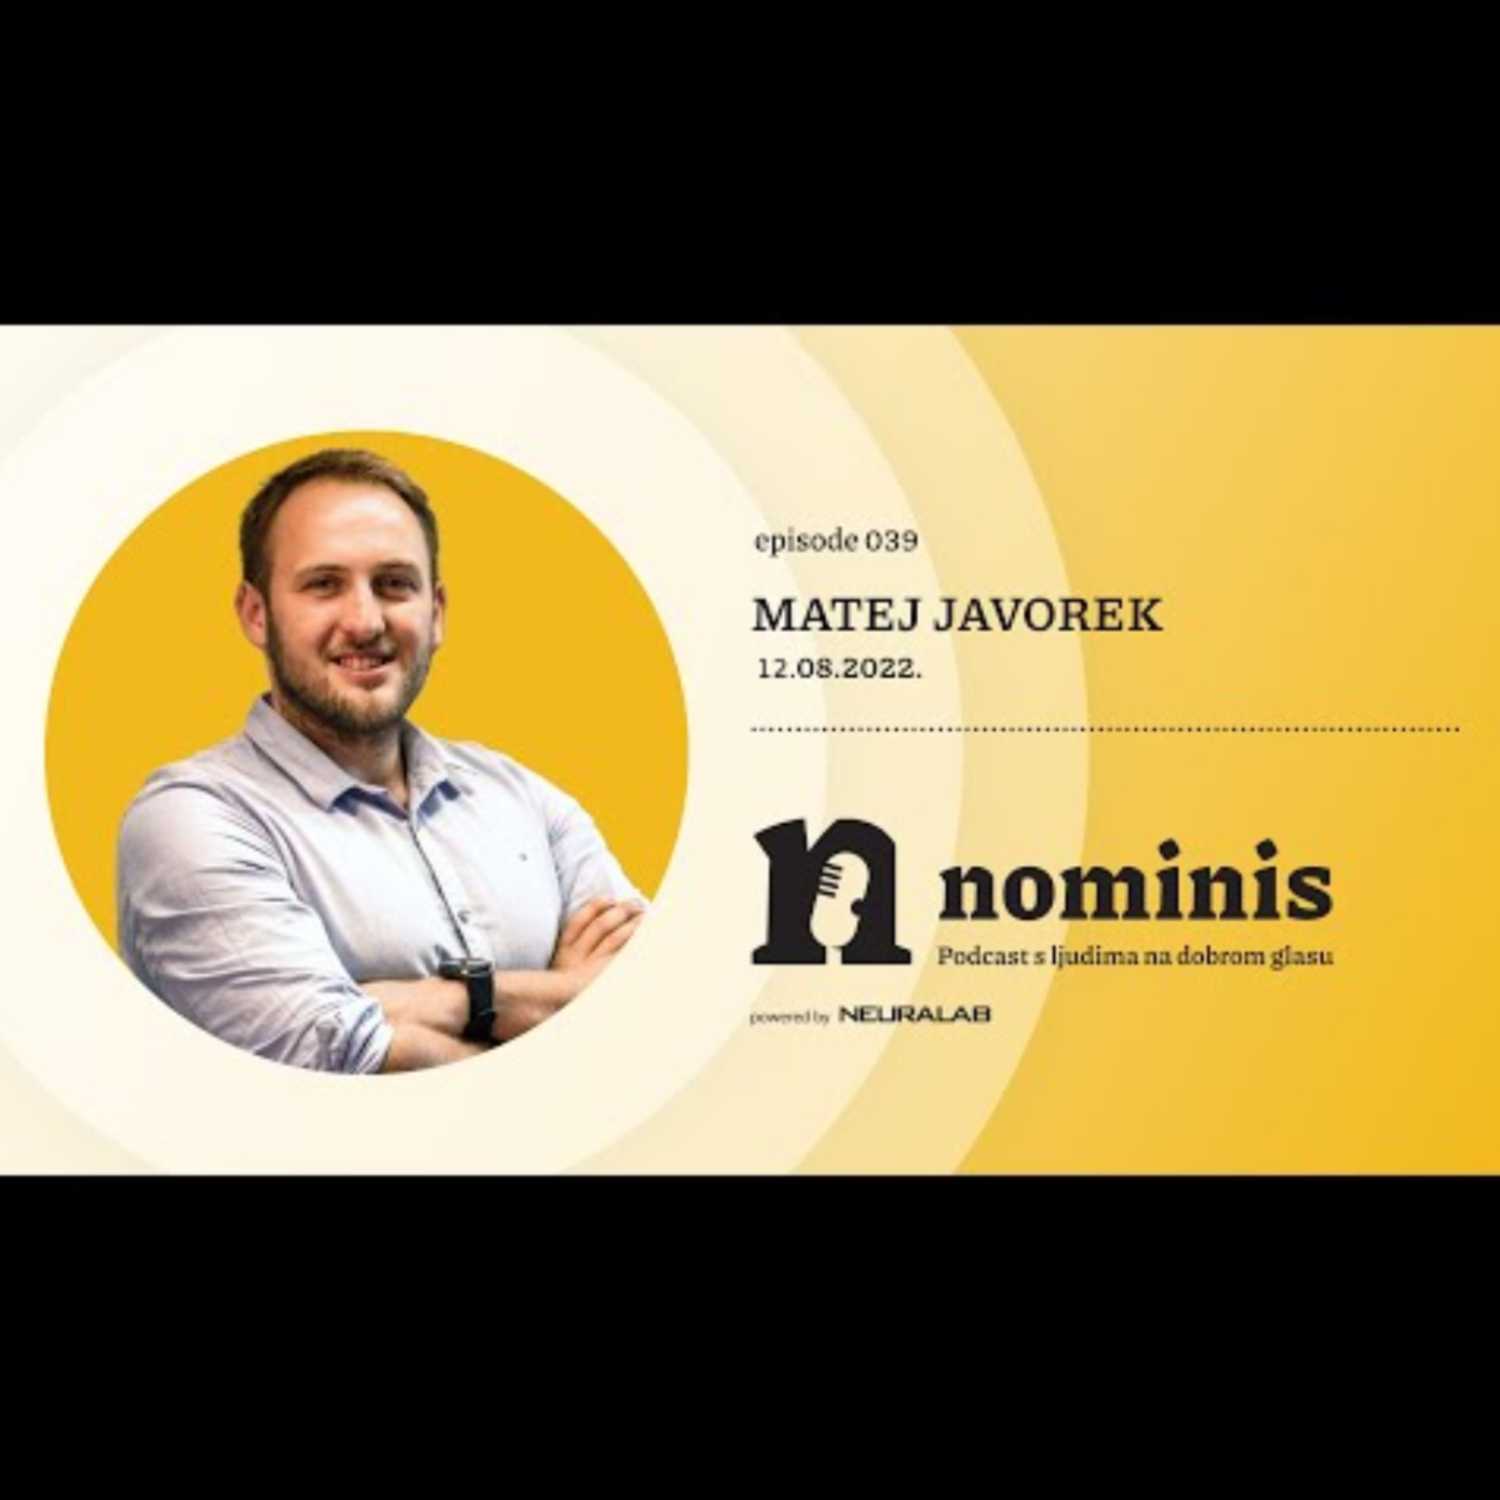 Nominis e39 – Matej Javorek / pickpack.hr (powered by Neuralab)